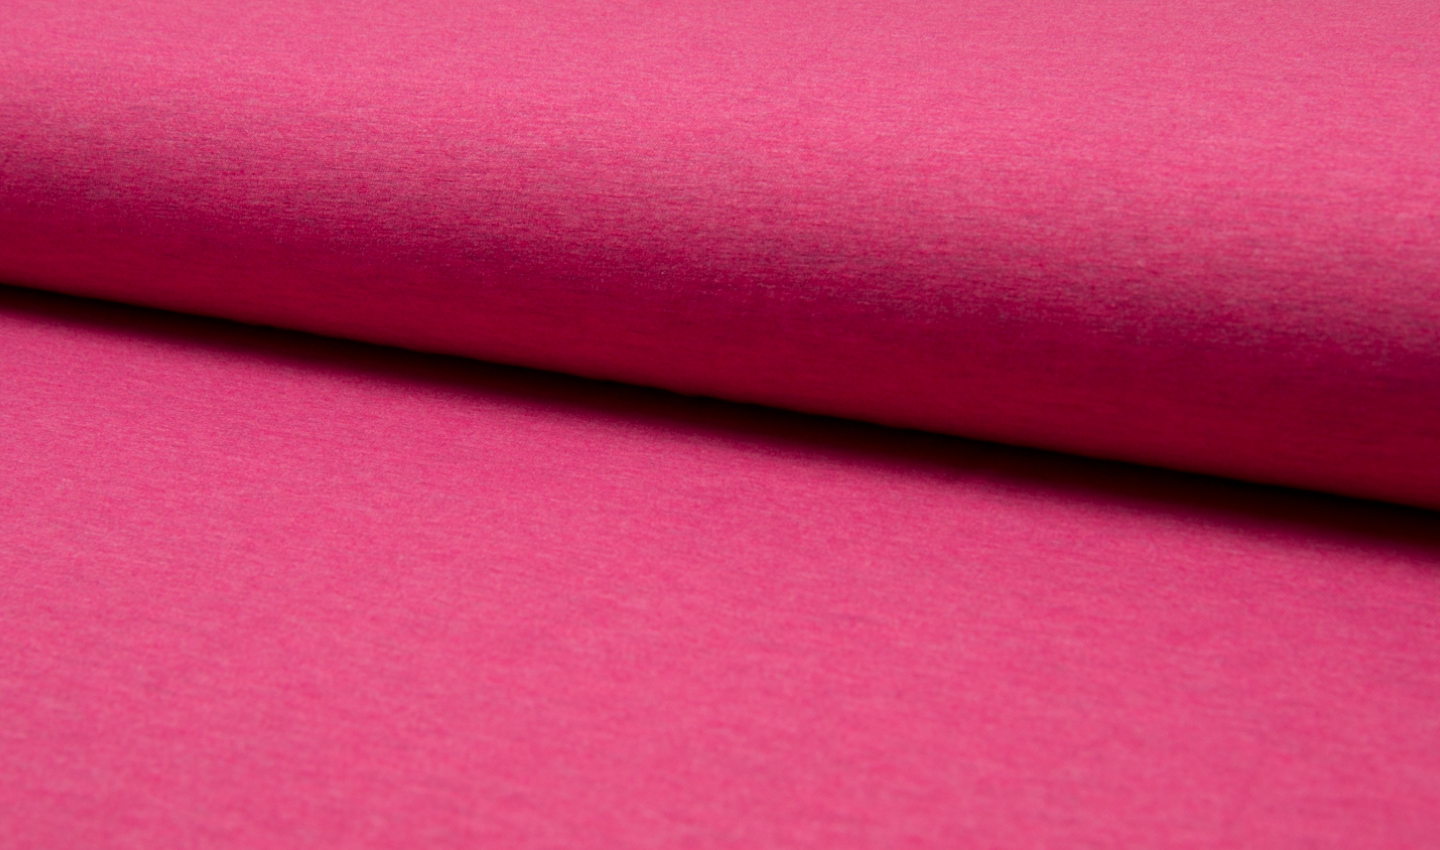 05m Jersey uni meliert fuchsia pink 016